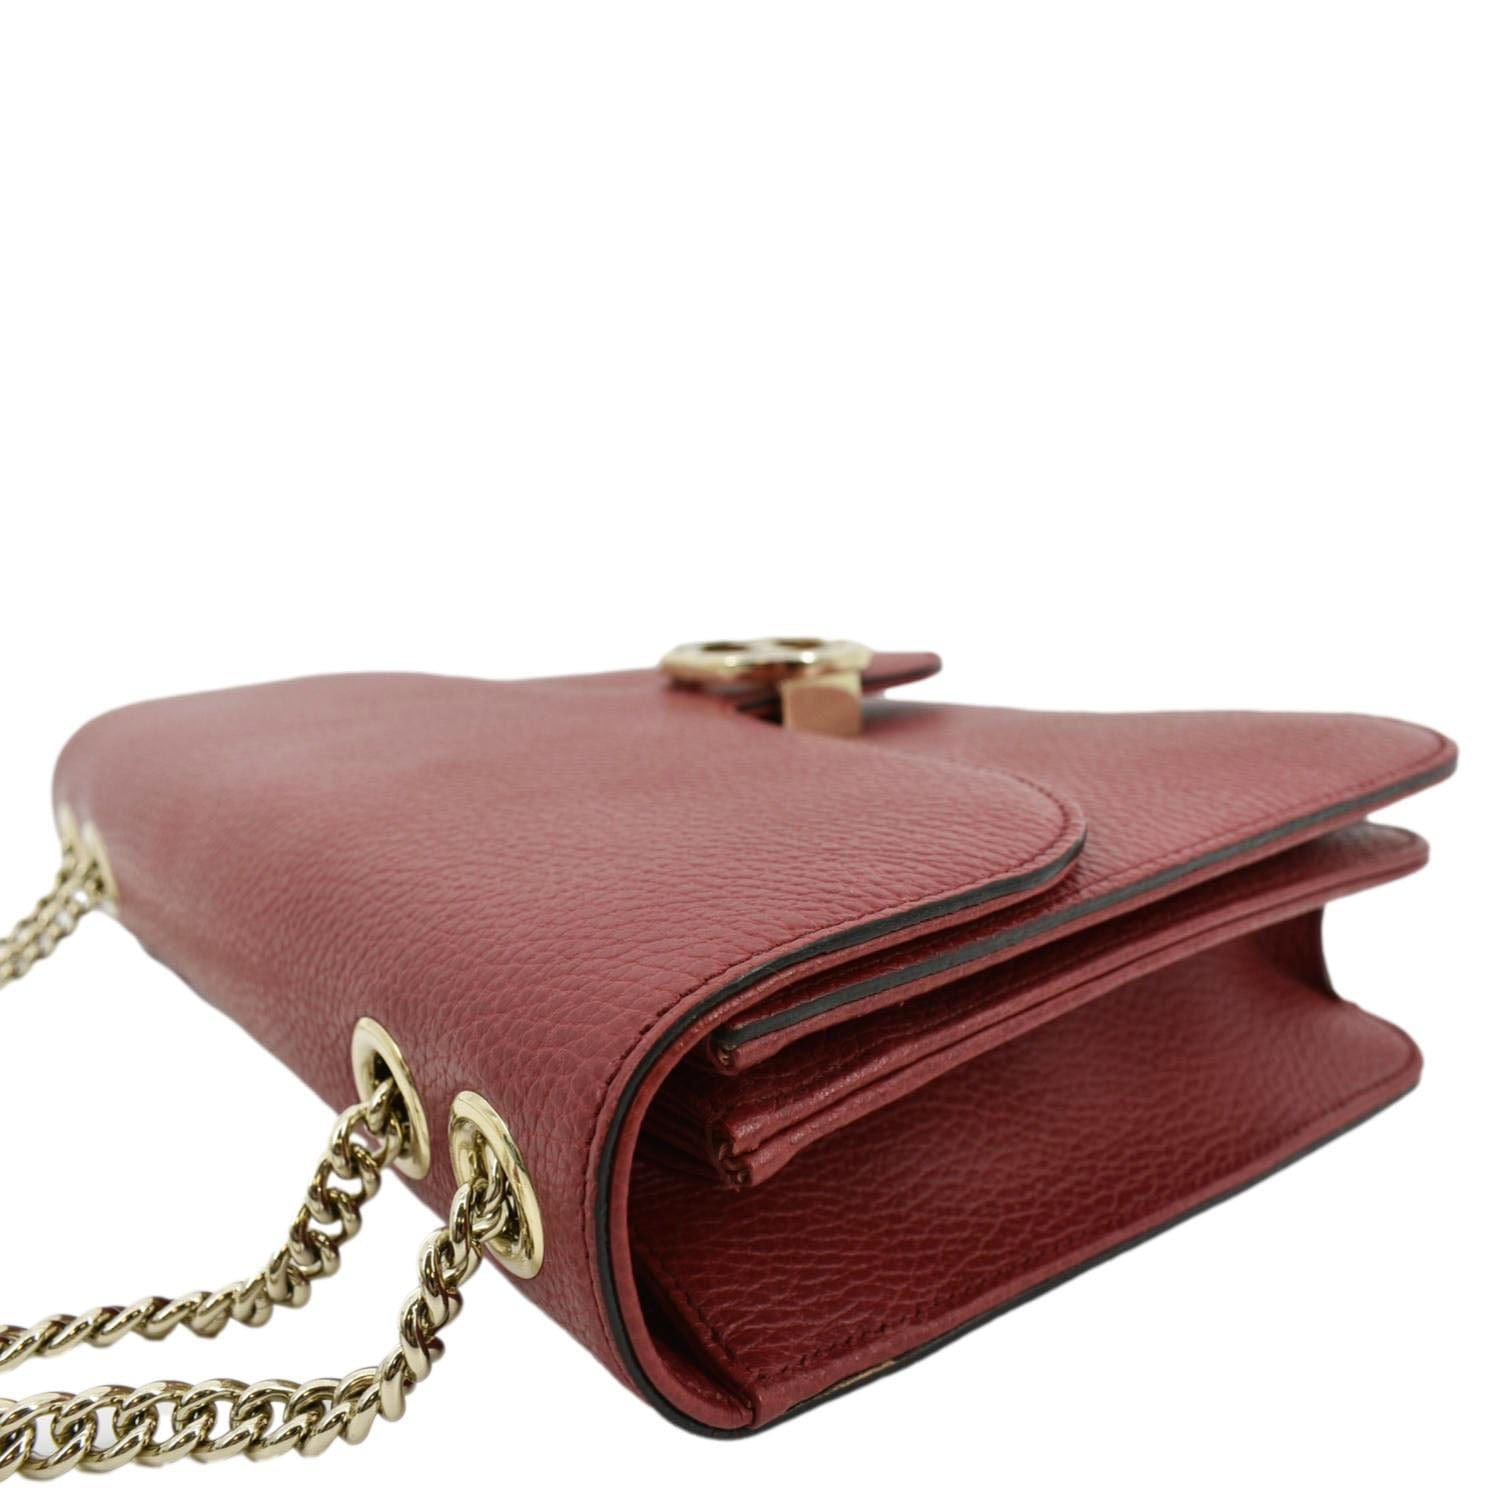 Gucci, Bags, Like New Red Dollar Calfskin Gucci Interlocking Gg Bag With  Gold Hardware